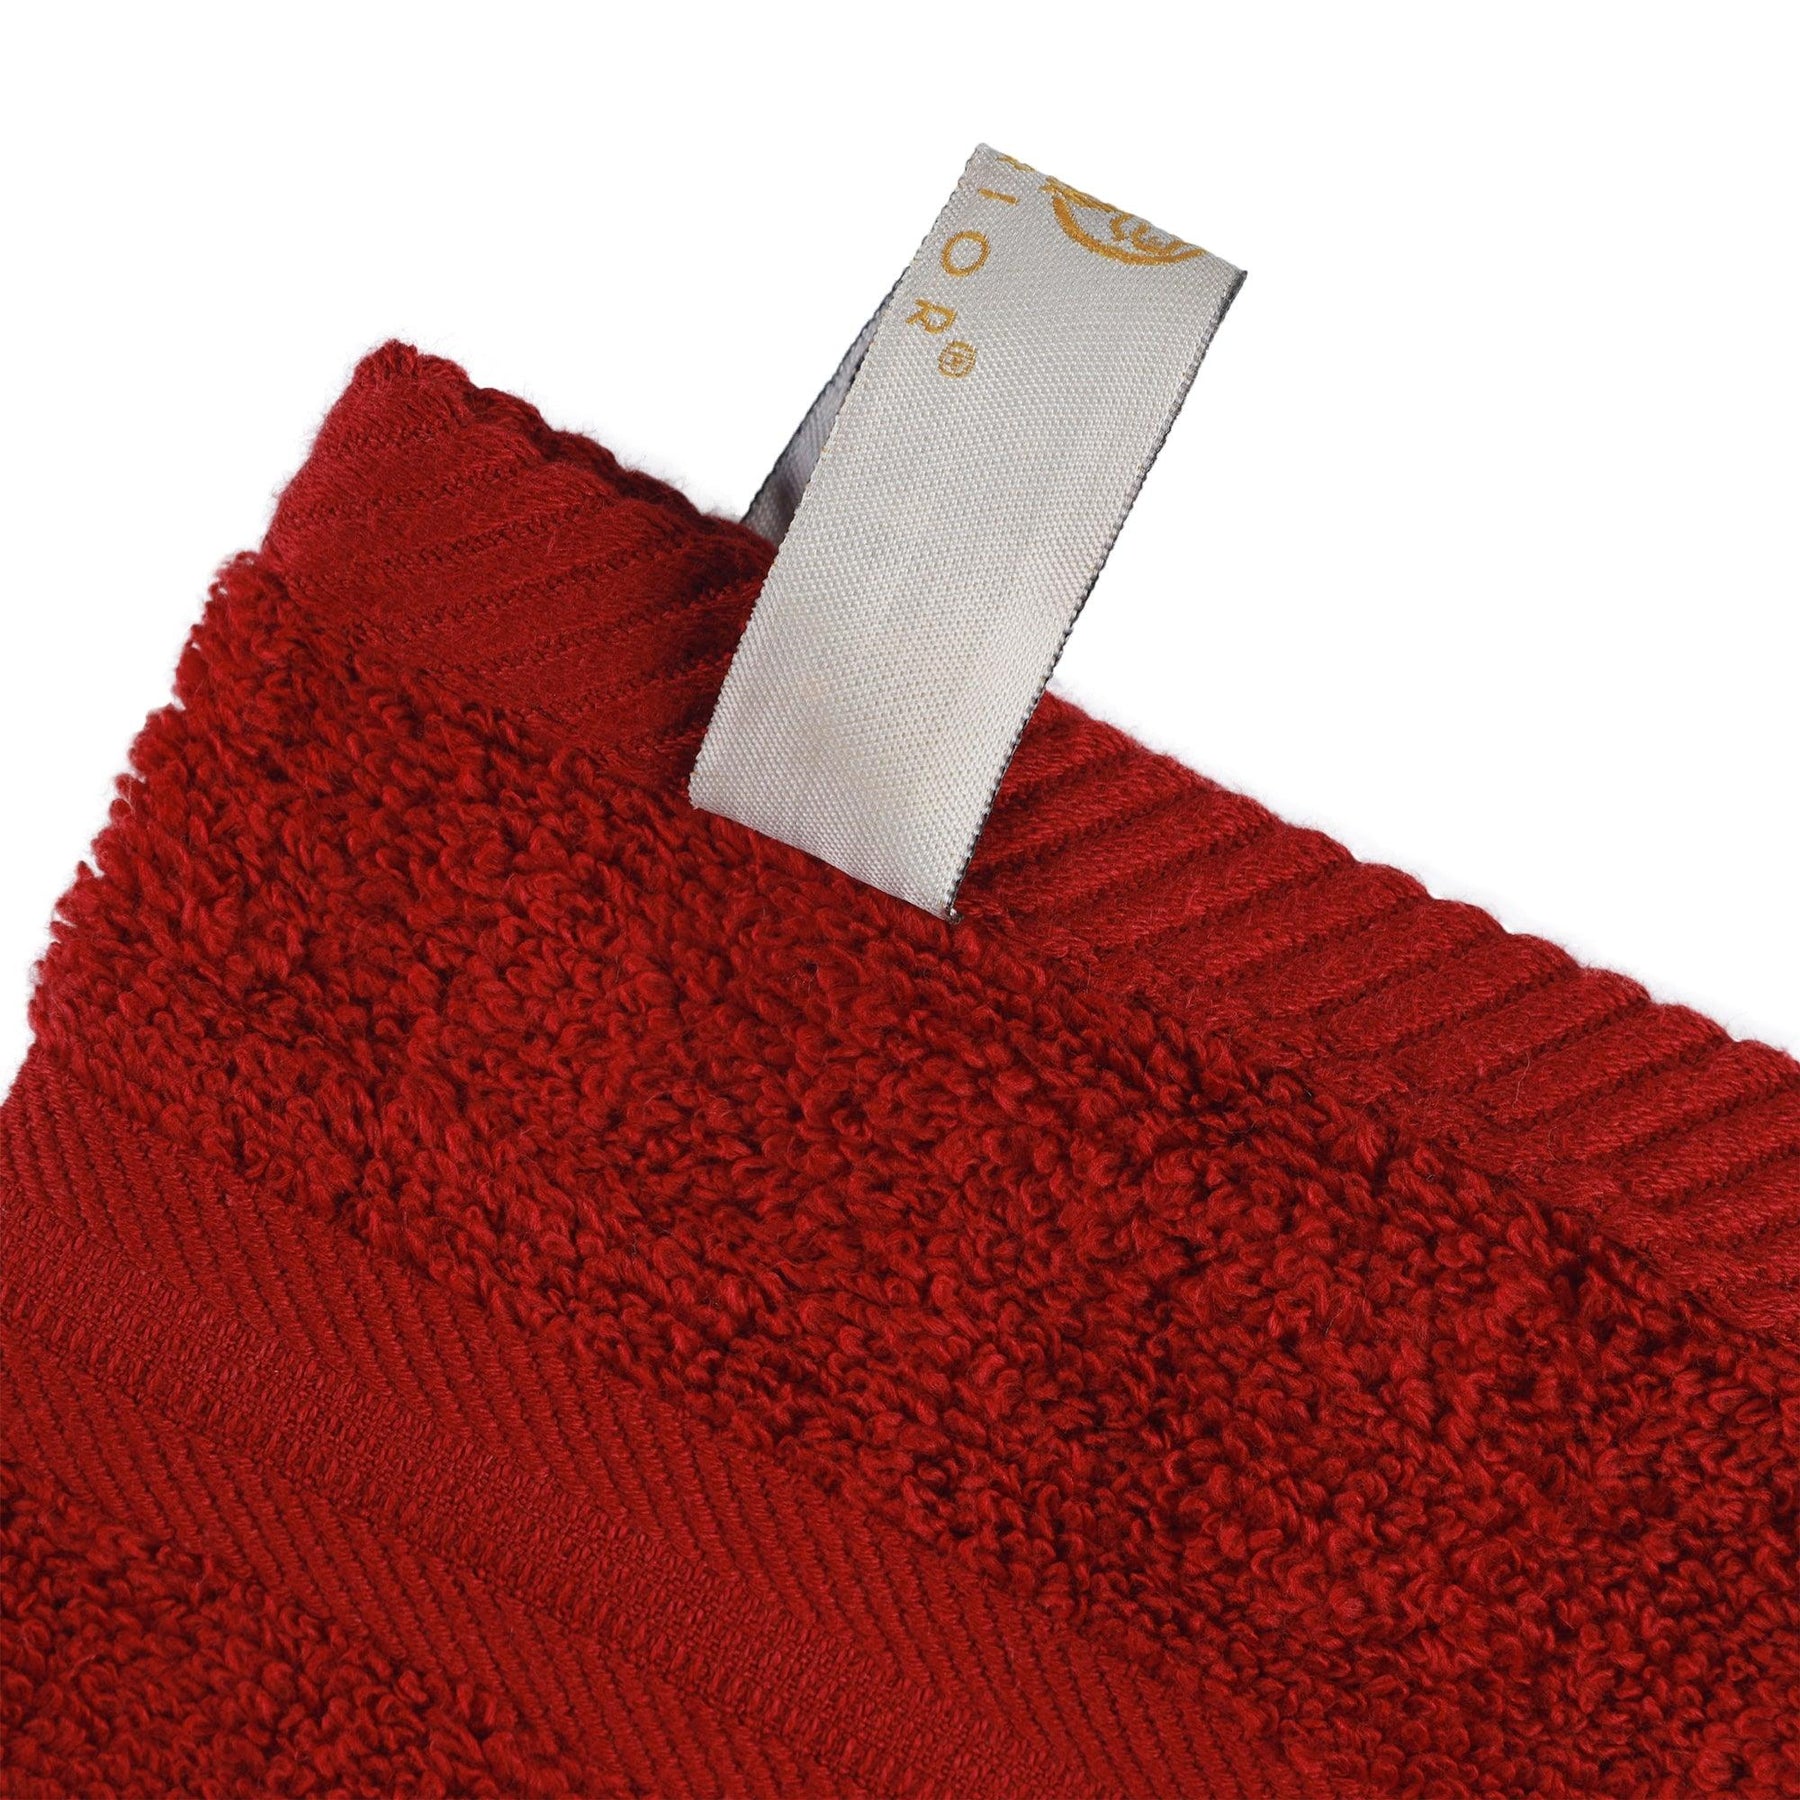 Smart Dry Zero Twist Cotton 8 Piece Assorted Towel Set - Towel Set by Superior - Superior 